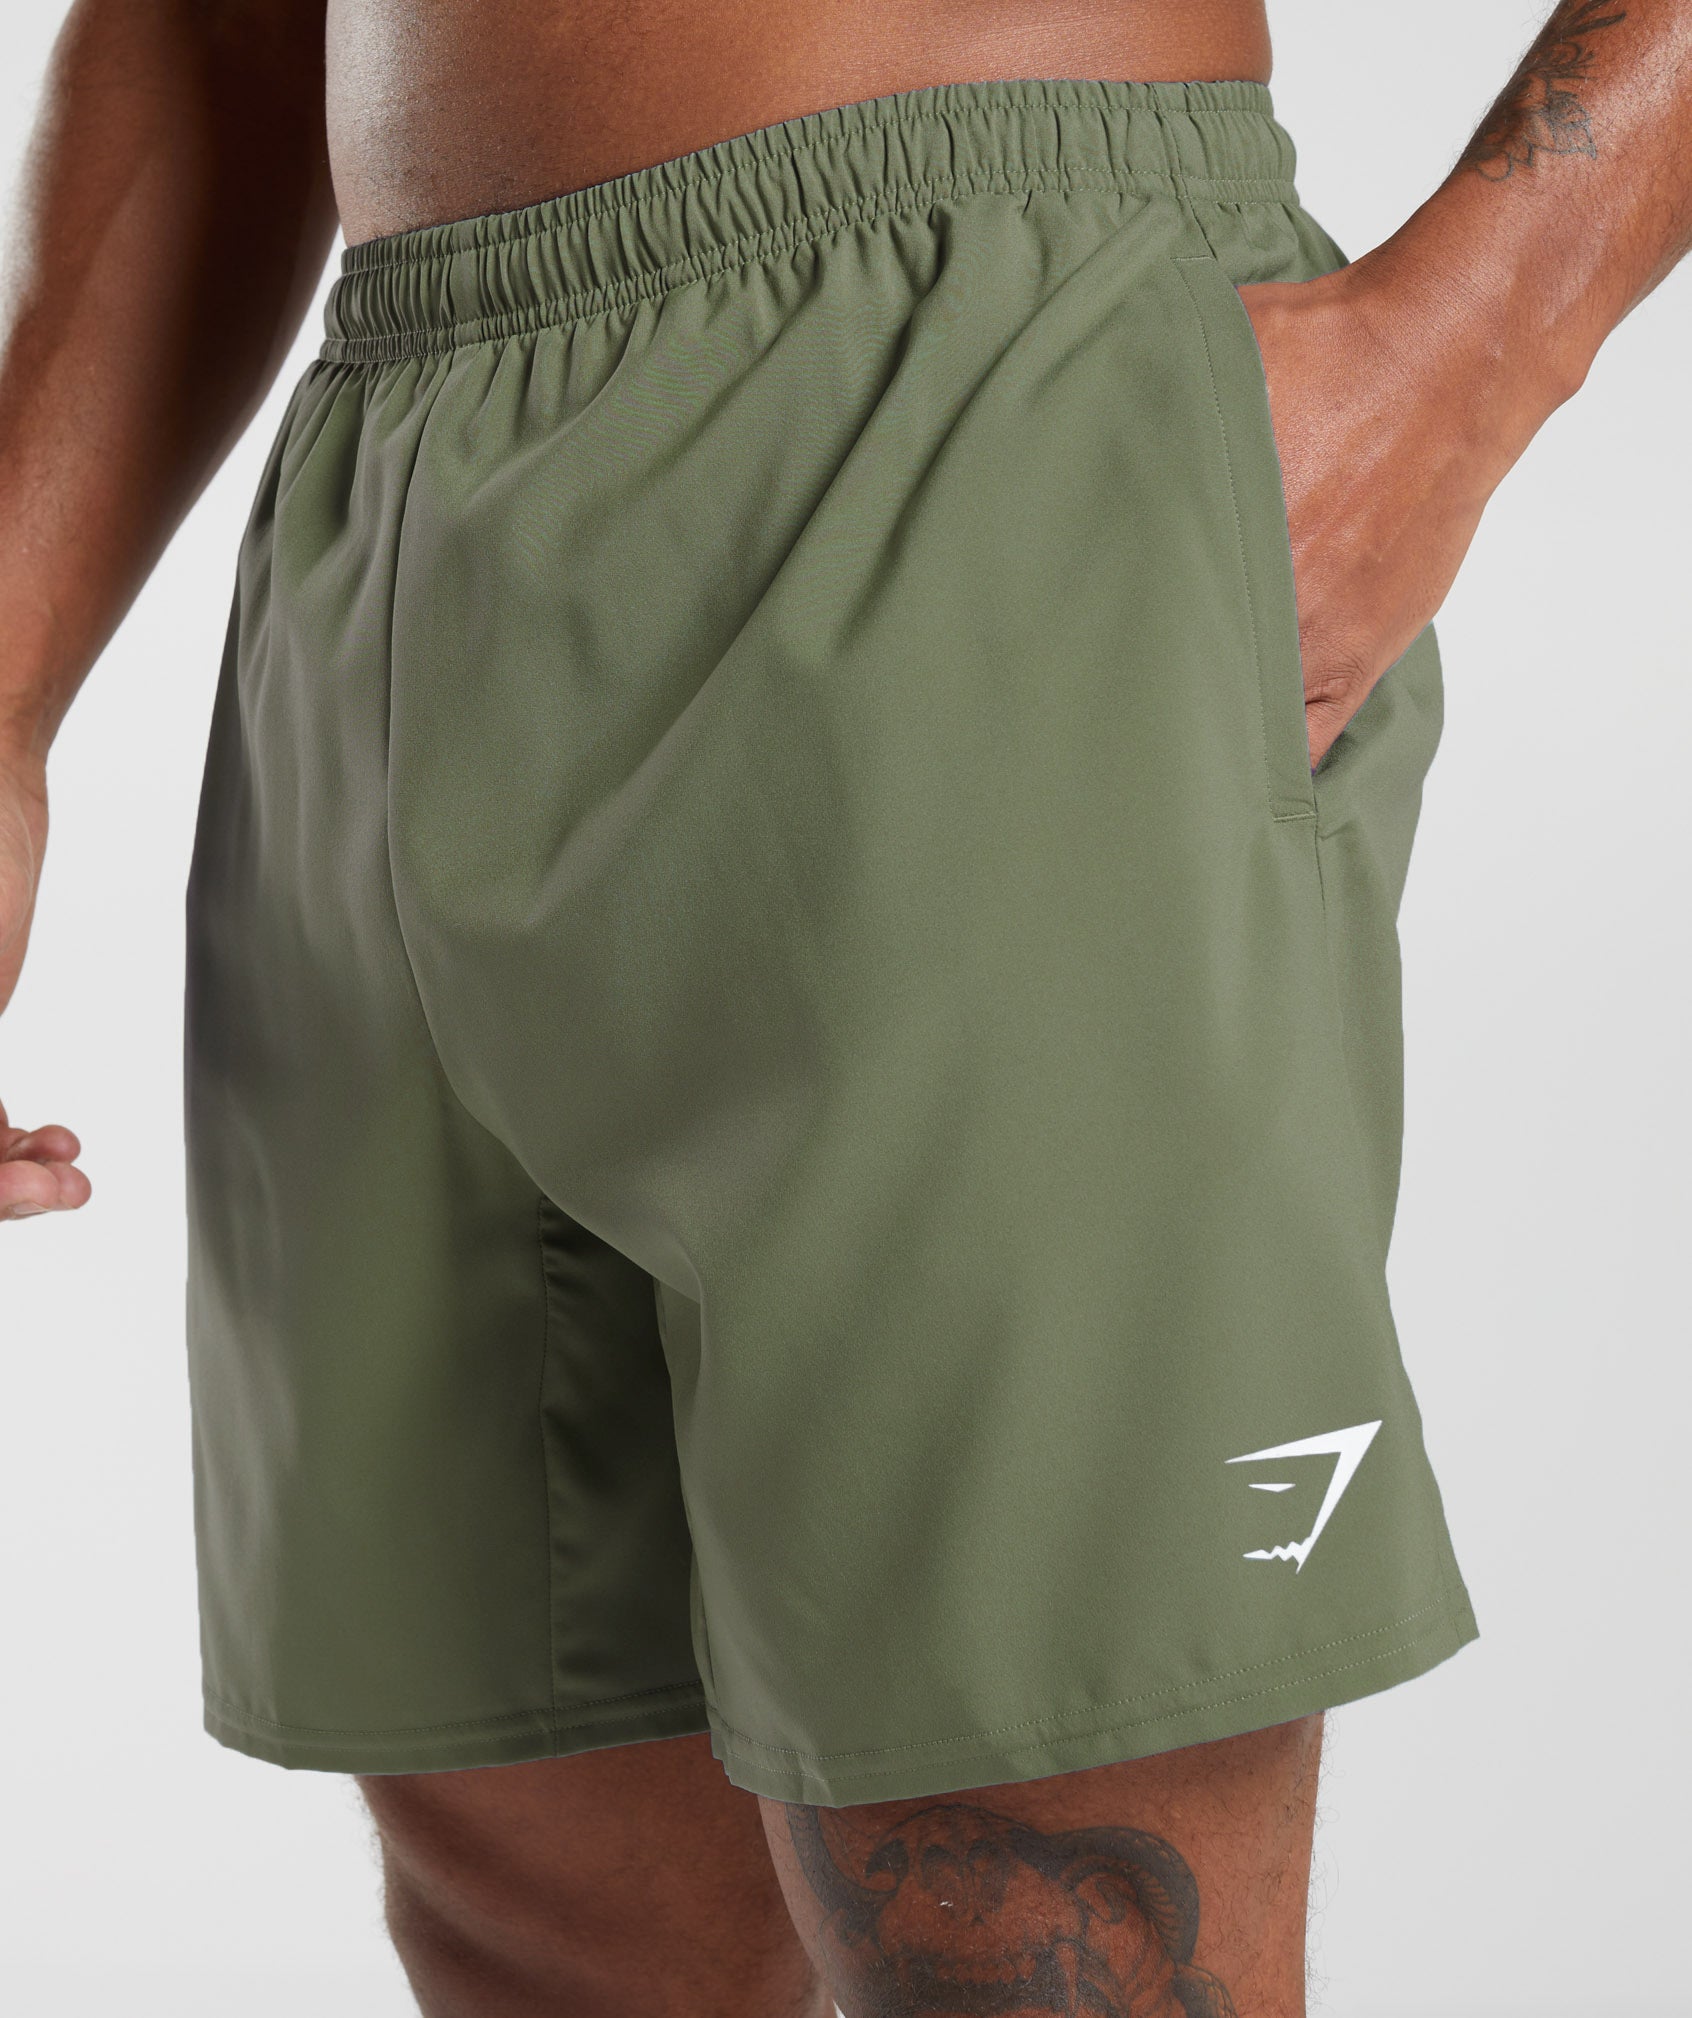 Freely, Shorts, Freelywomens Sizexl Green Athletic Workout Shorts